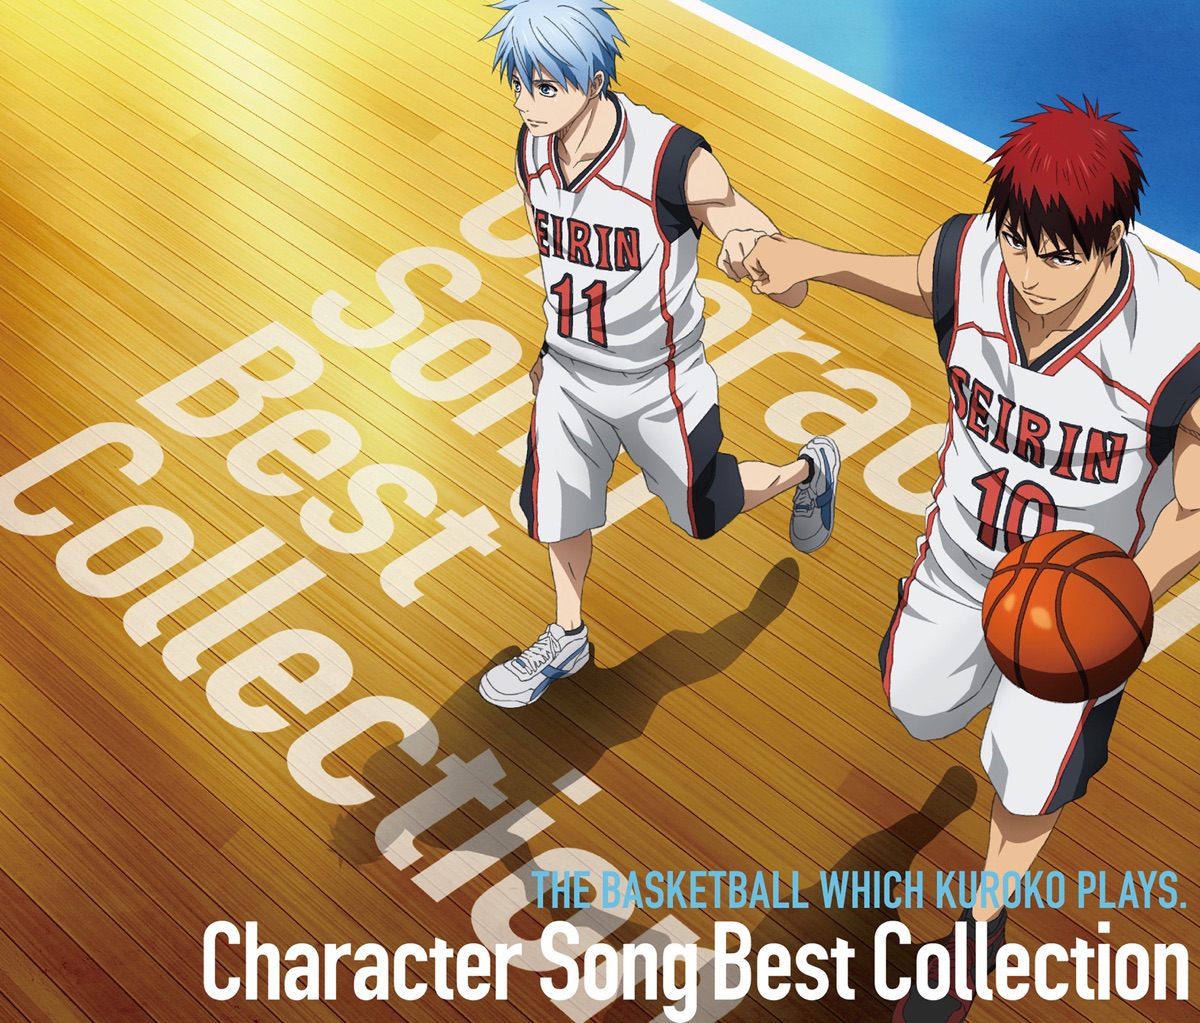 TV Anime Kuroko's Basketball Character Song Duet Series Vol. 2: Tetsuya  Kuroko & Ryota Kise